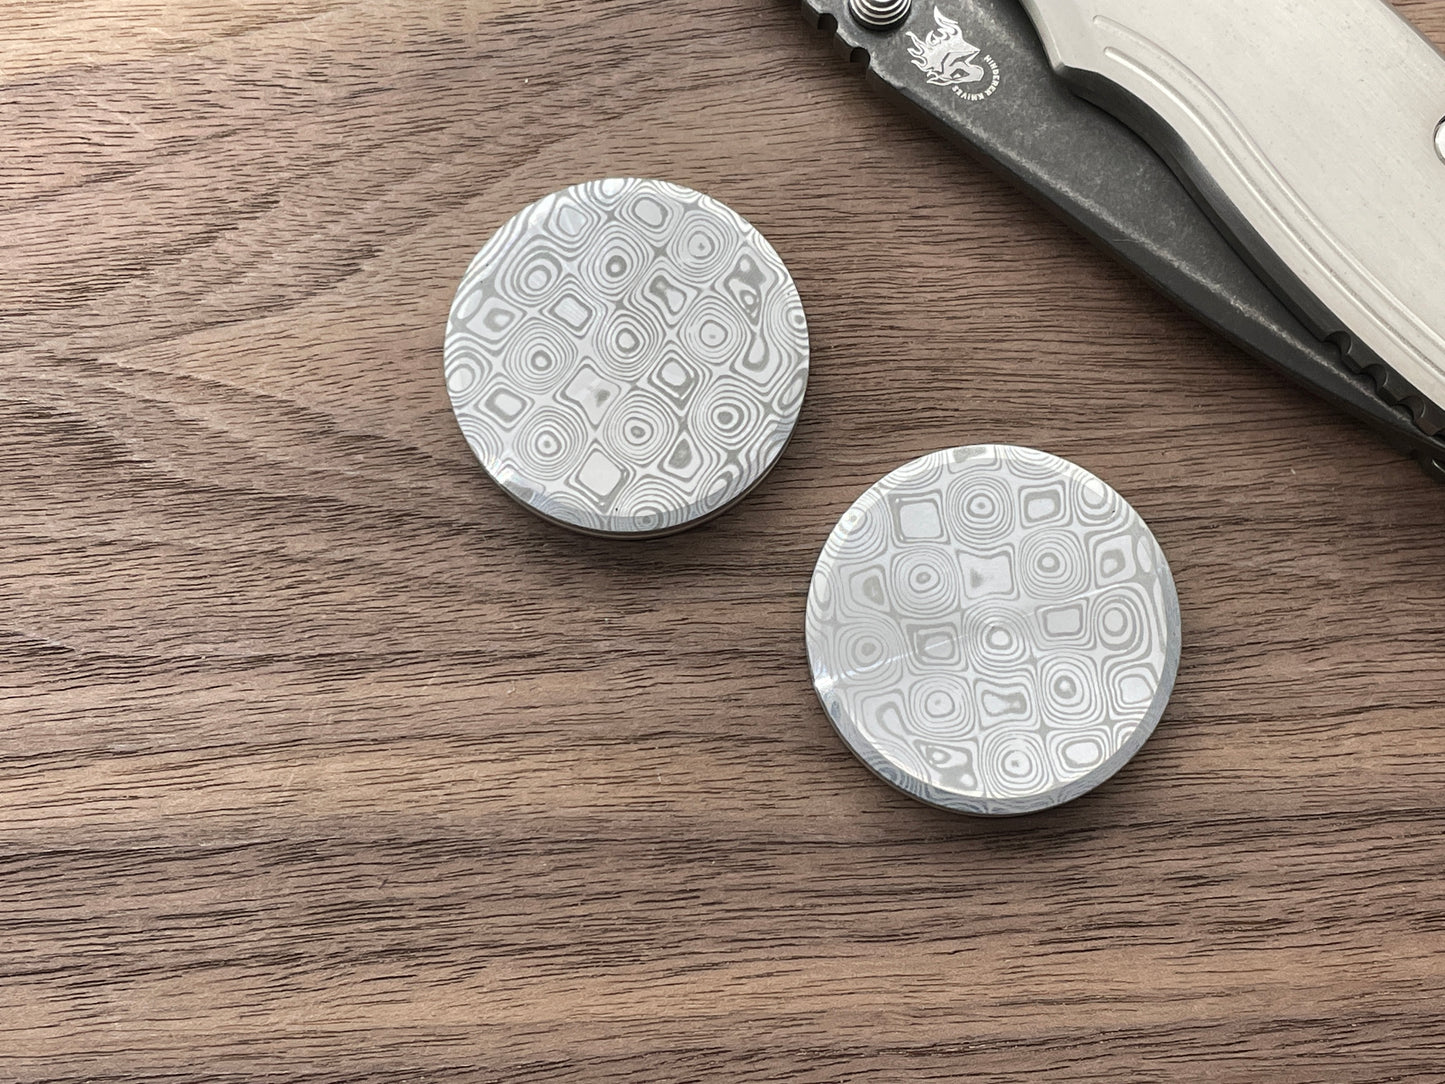 Dama ROSES pattern engraved Aluminum CLICKY Haptic Coins Fidget